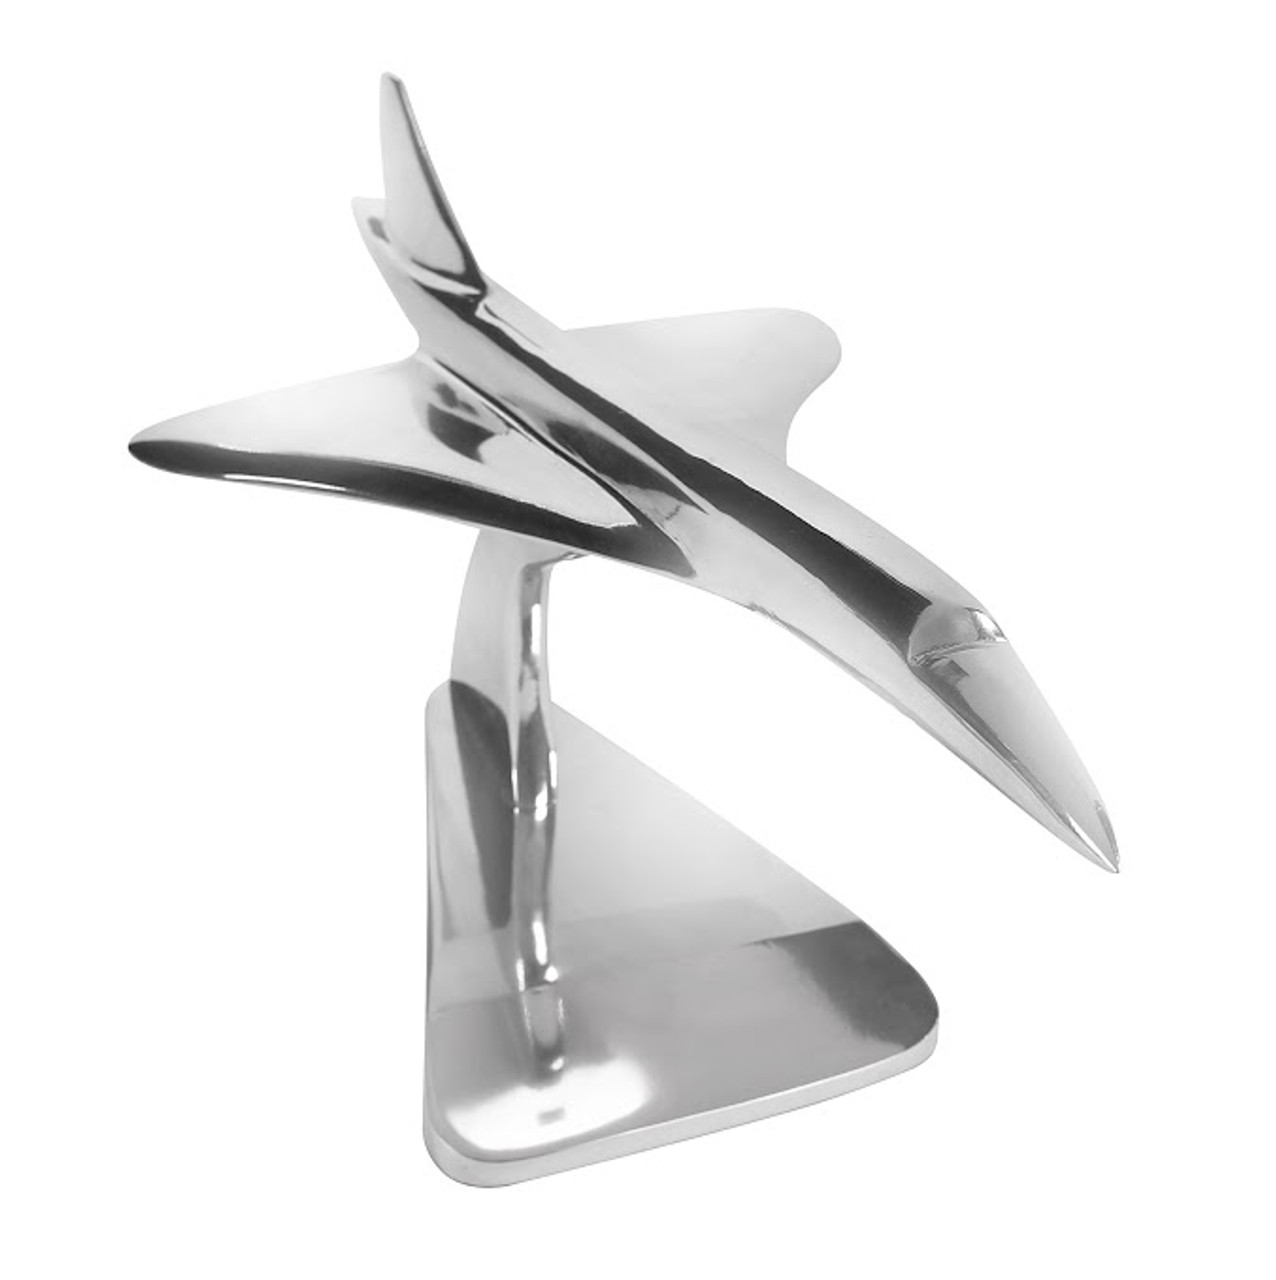 Aluminum Concorde Desktop Model Airplane Sculpture Aviation Gift